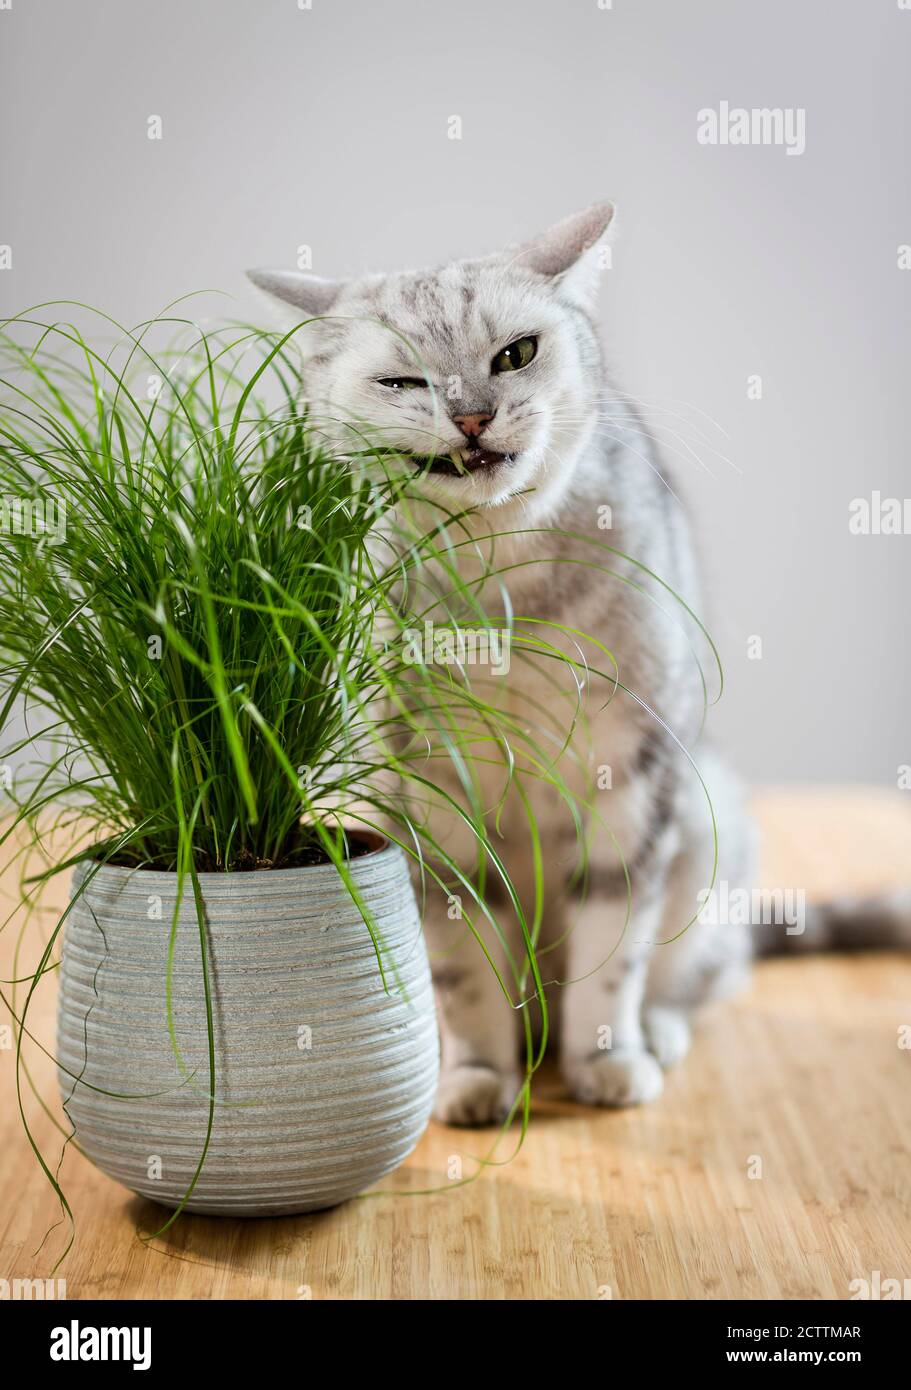 Britisch Kurzhaar. Tabby tomcat eating cat grass. Stock Photo